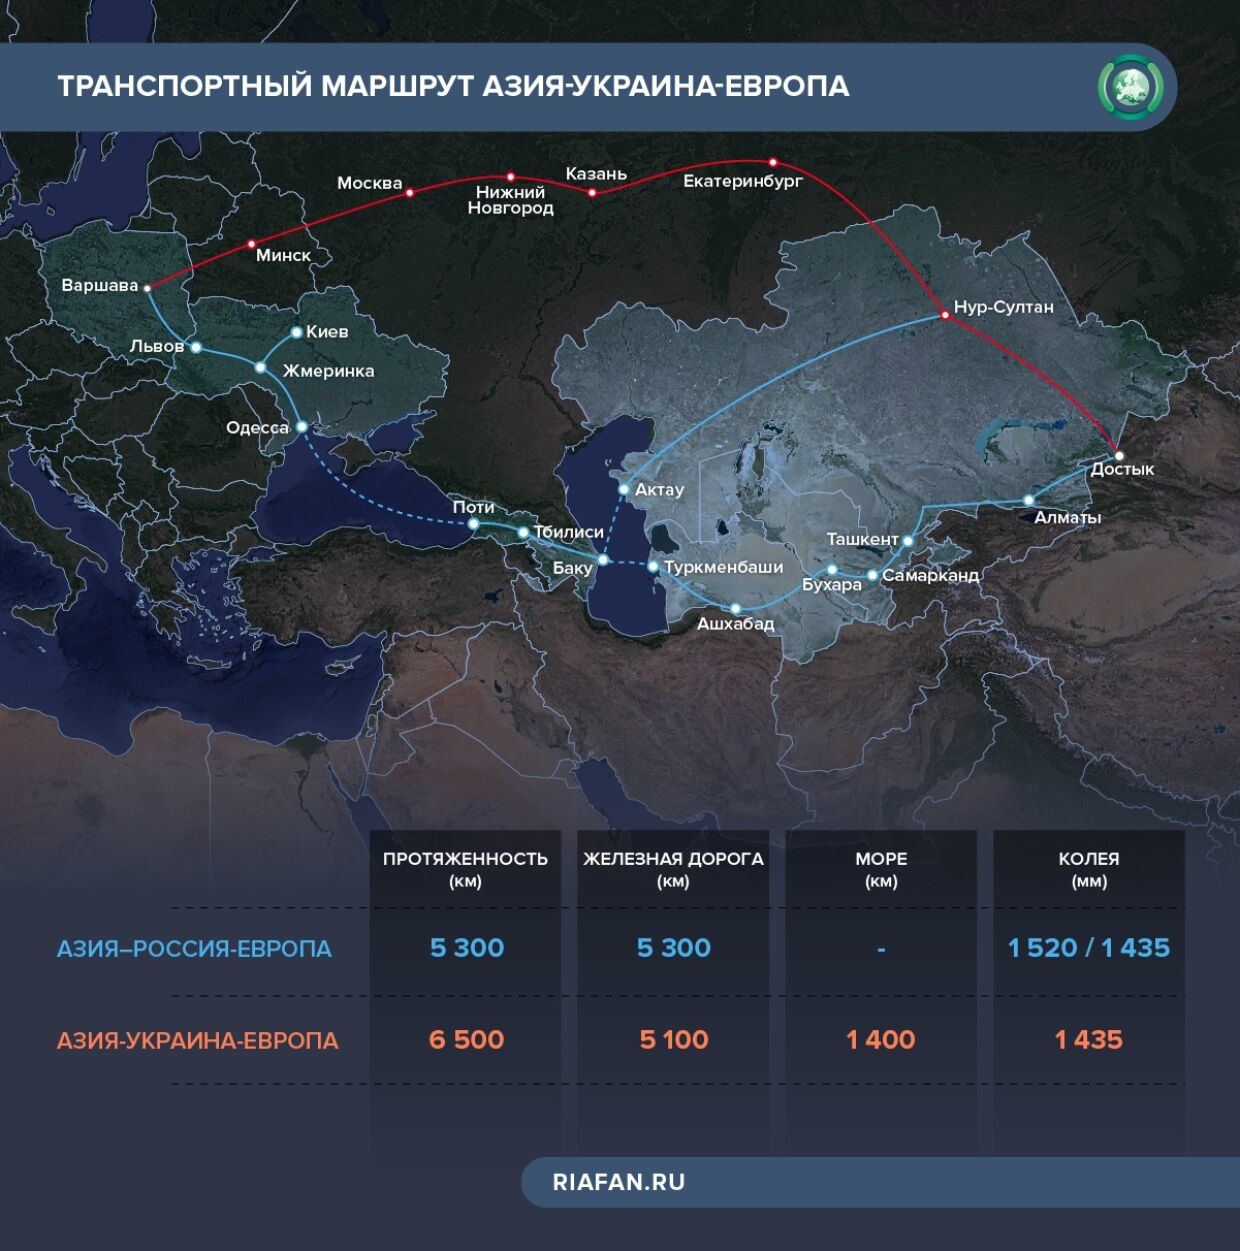 Strategic game in Transcaucasia: What did Putin agree on, Aliyev and Pashinyan